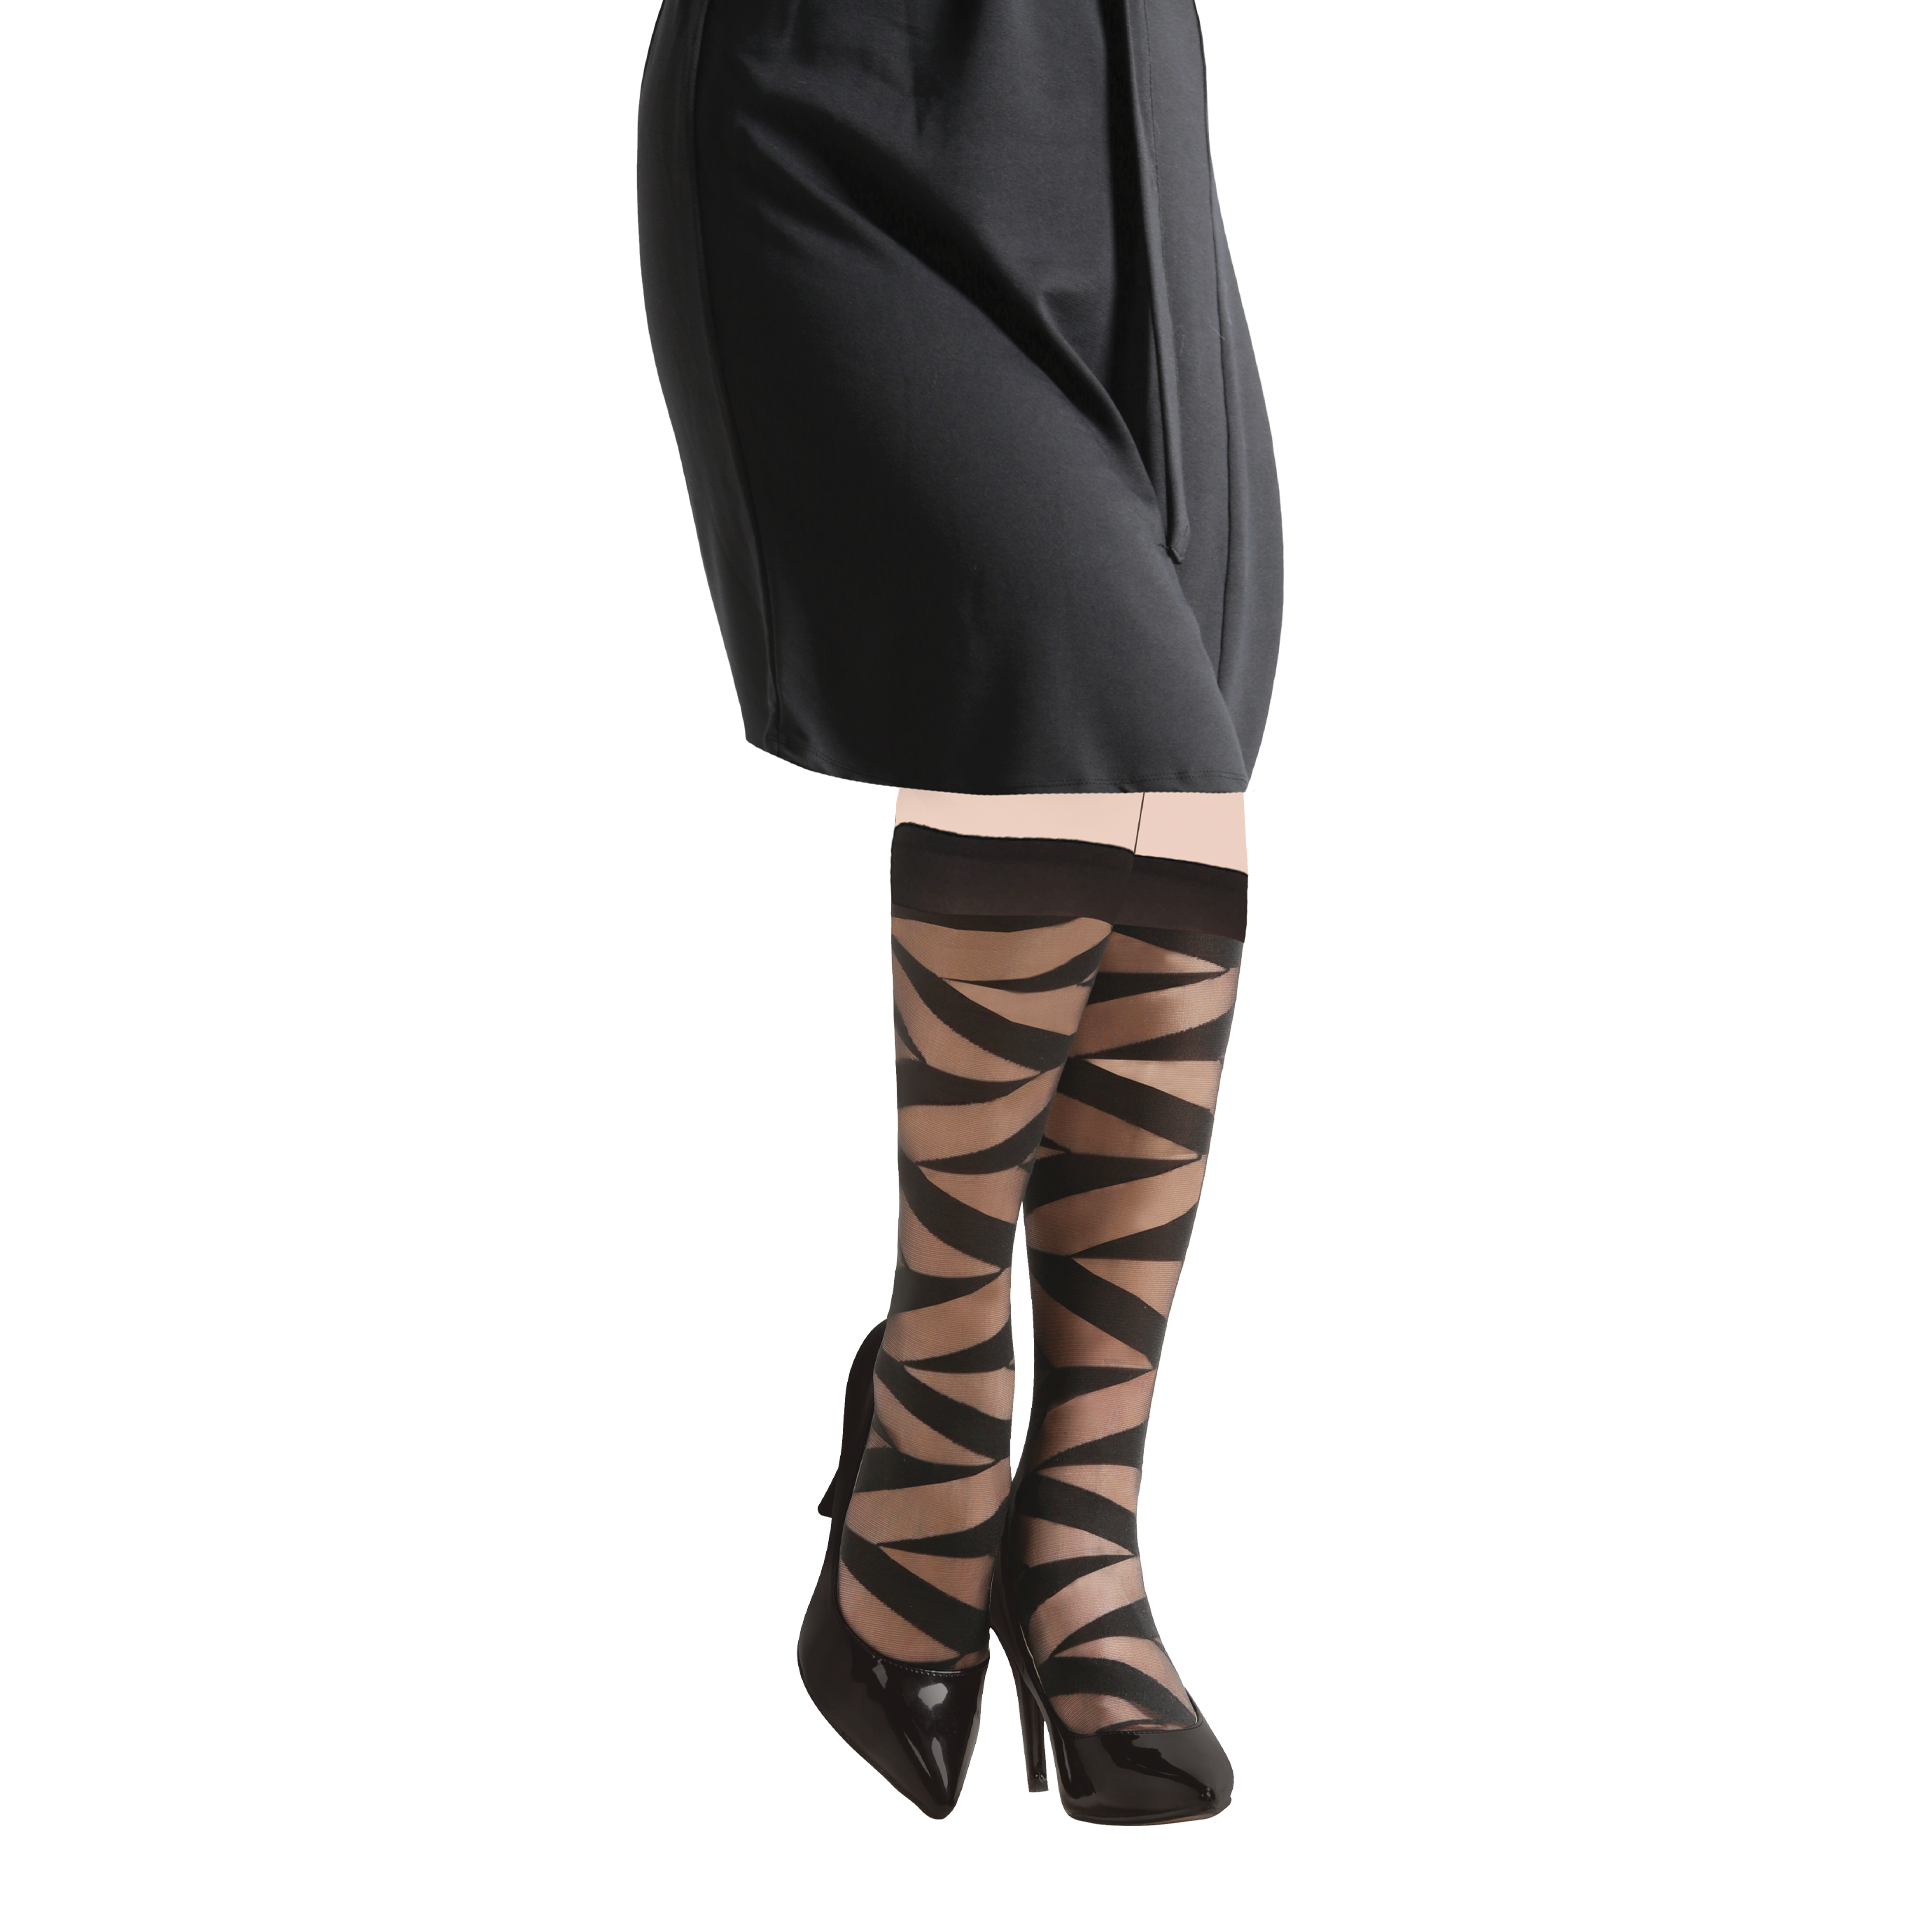 Fashion Stripy Style, Ultra Sheer 20 Den Patterned KneeHigh